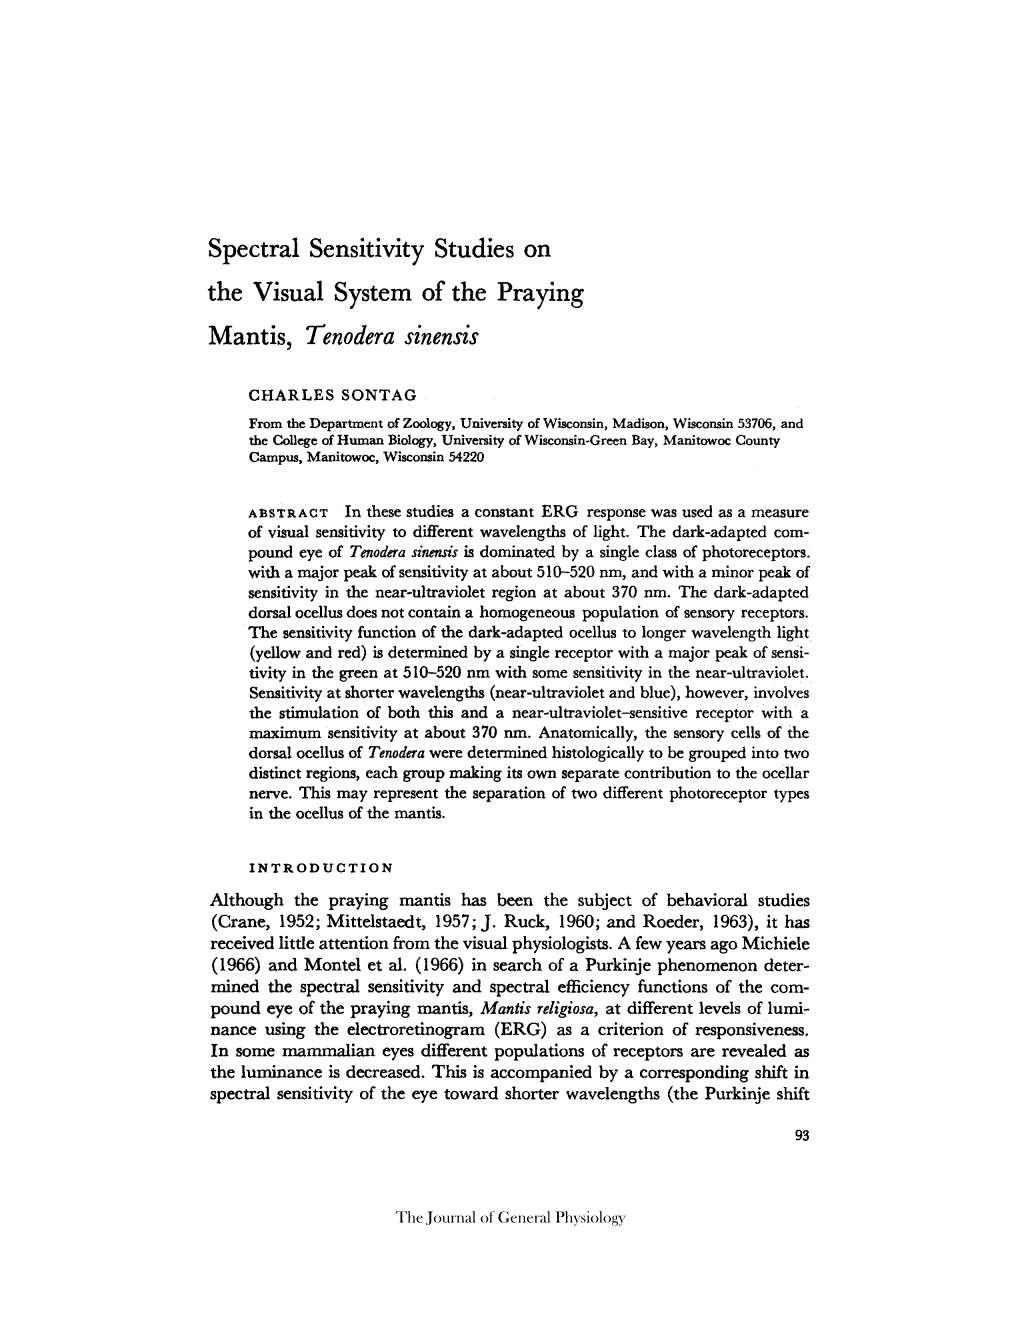 Spectral Sensitivity Studies on the Visual System of the Praying Mantis, Enodera Sinensis